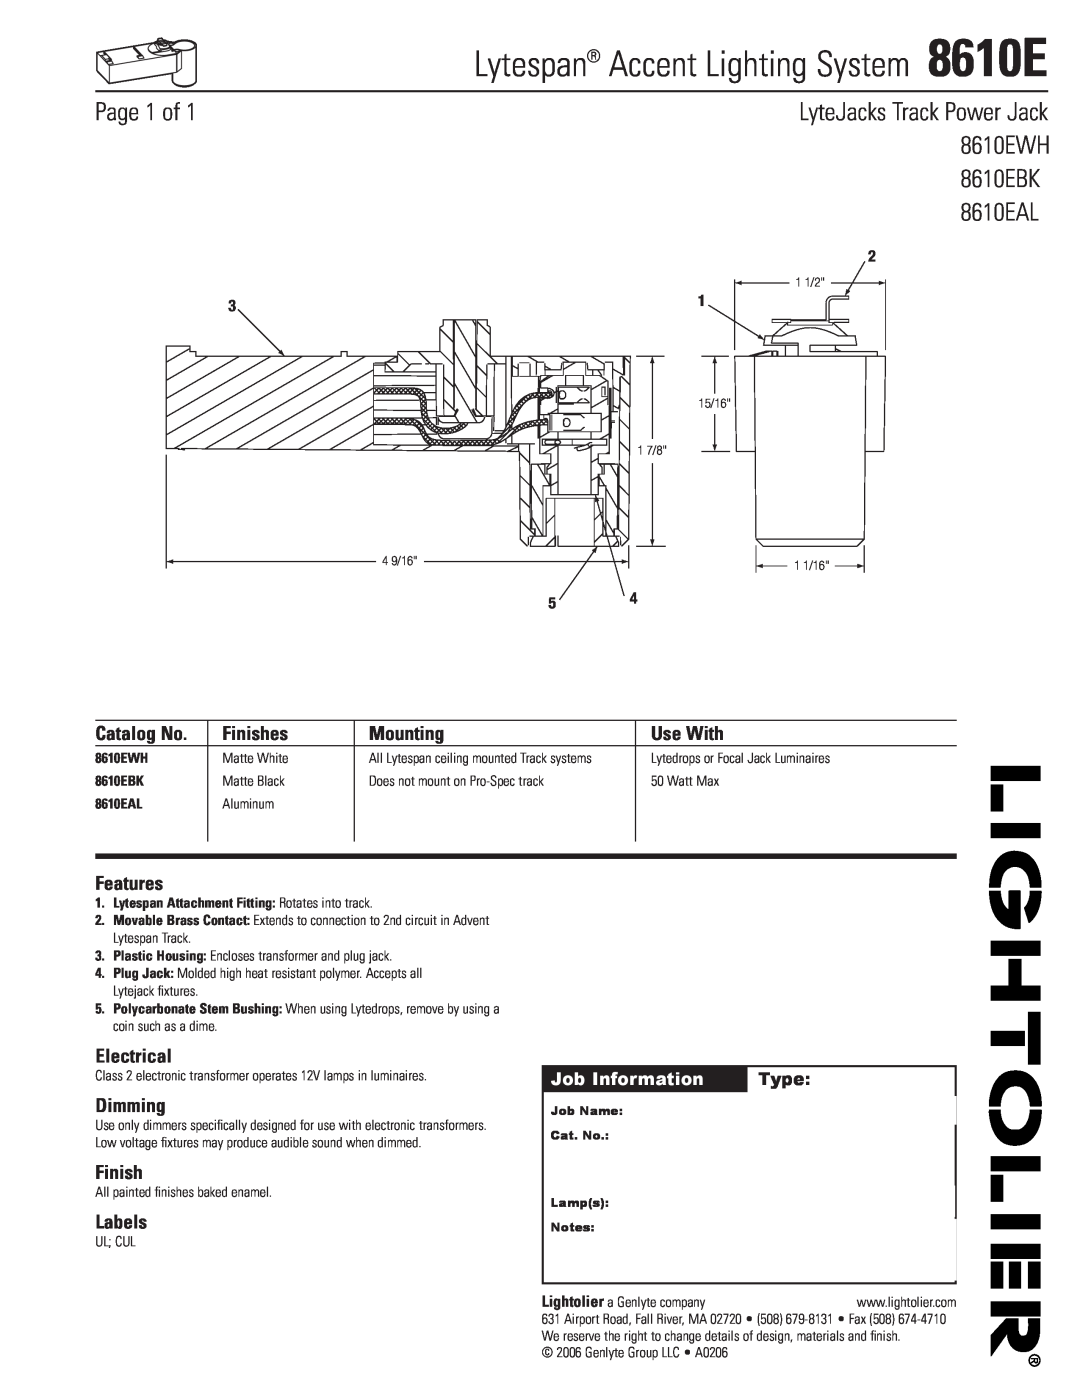 Lightolier manual Lytespan Accent Lighting System 8610E, LyteJacks Track Power Jack, Page 1 of, 8610EAL, 8610EWH 